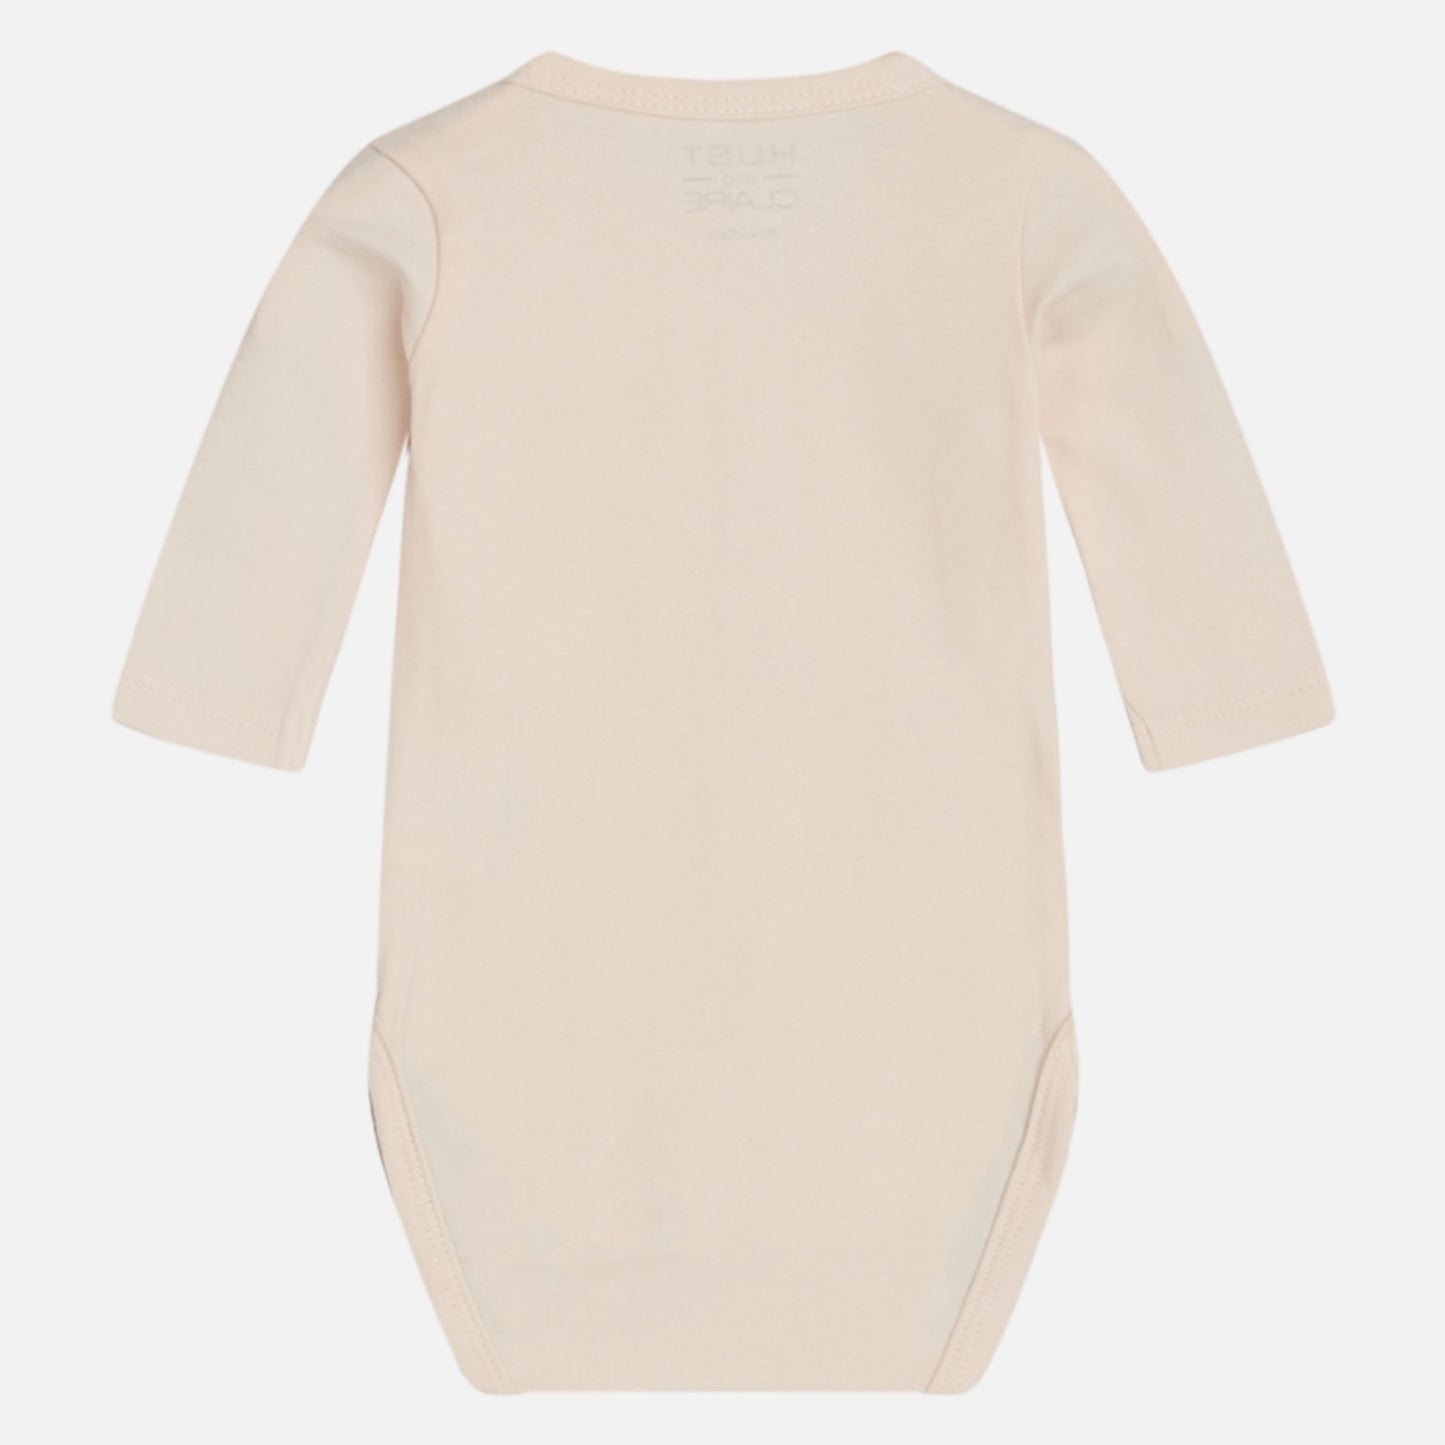 Duckling | Soft Pink | Long Sleeve Baby Bodysuit | GOTS Organic Cotton